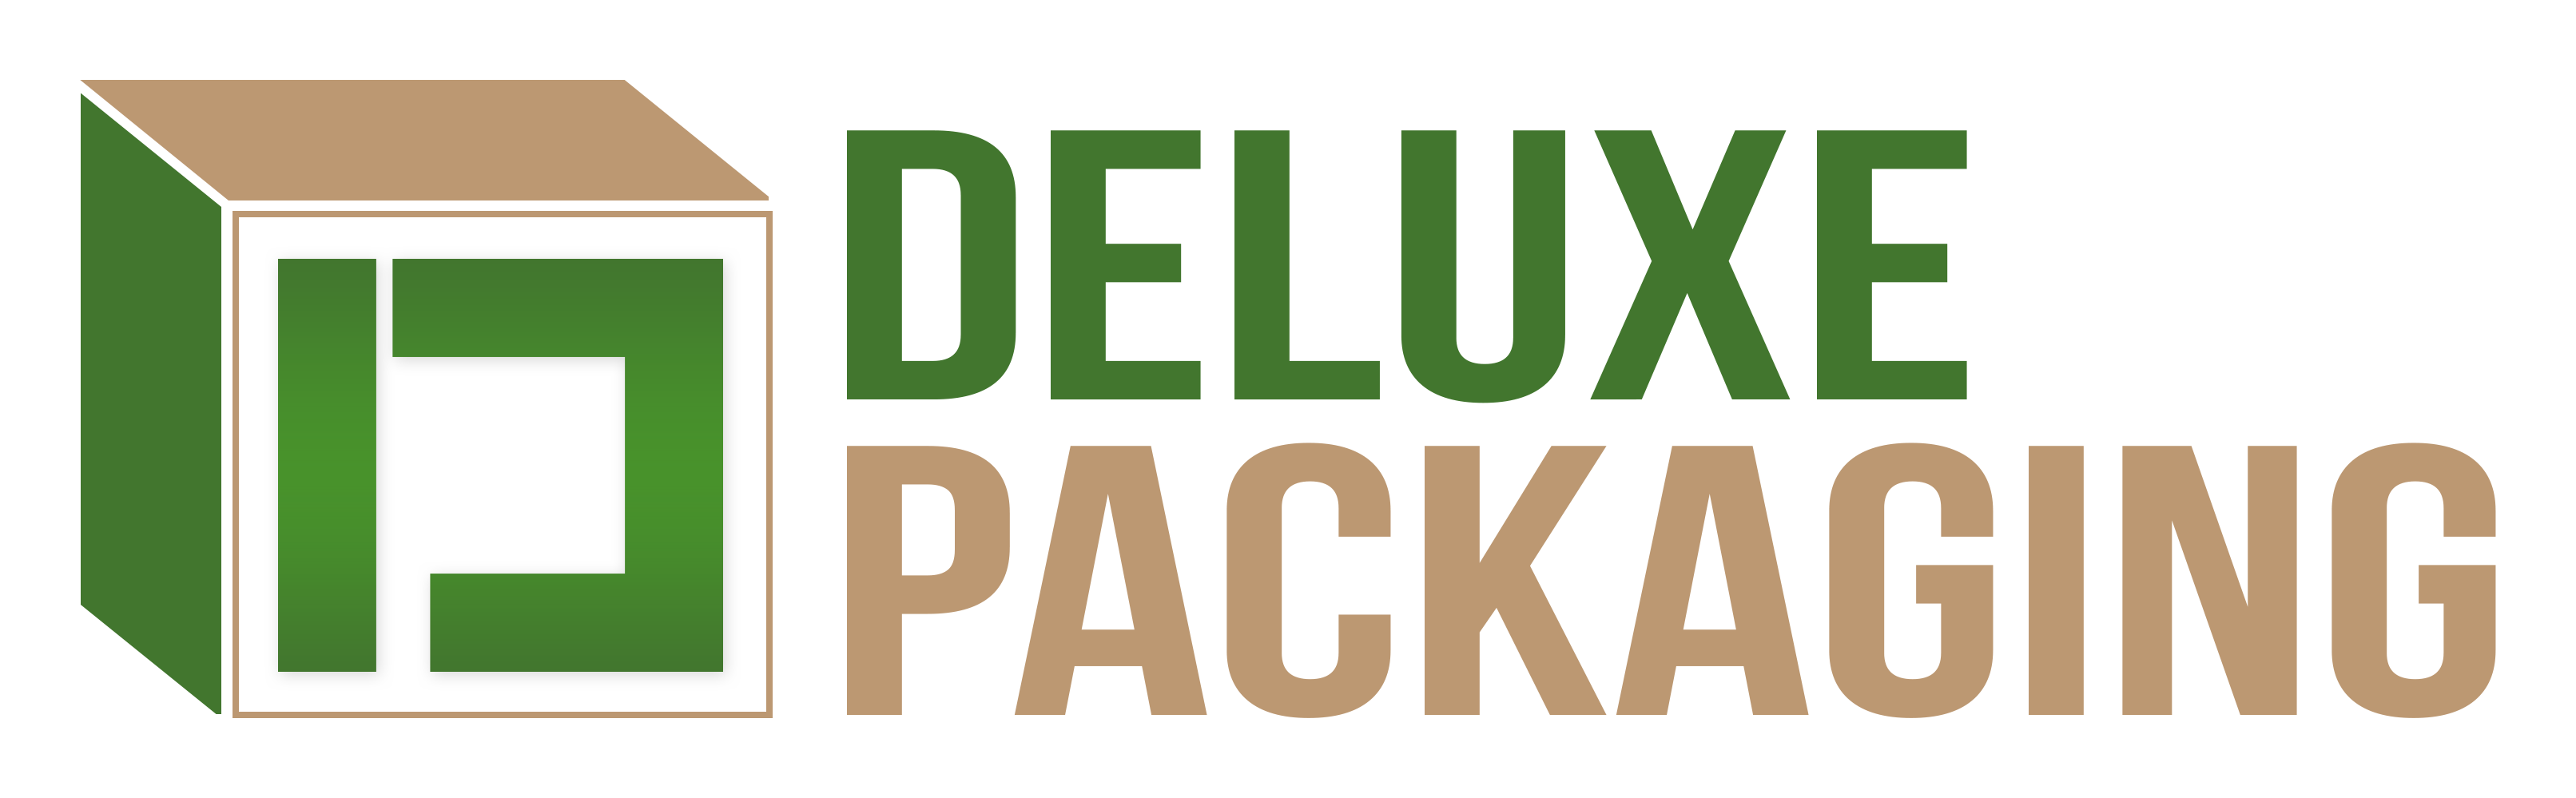 Bold, Playful Logo Design for Bridge Packaging / Bags, Bottles, Jars,  Containers, Packer Bottles, Etc by Joelan B | Design #23409155